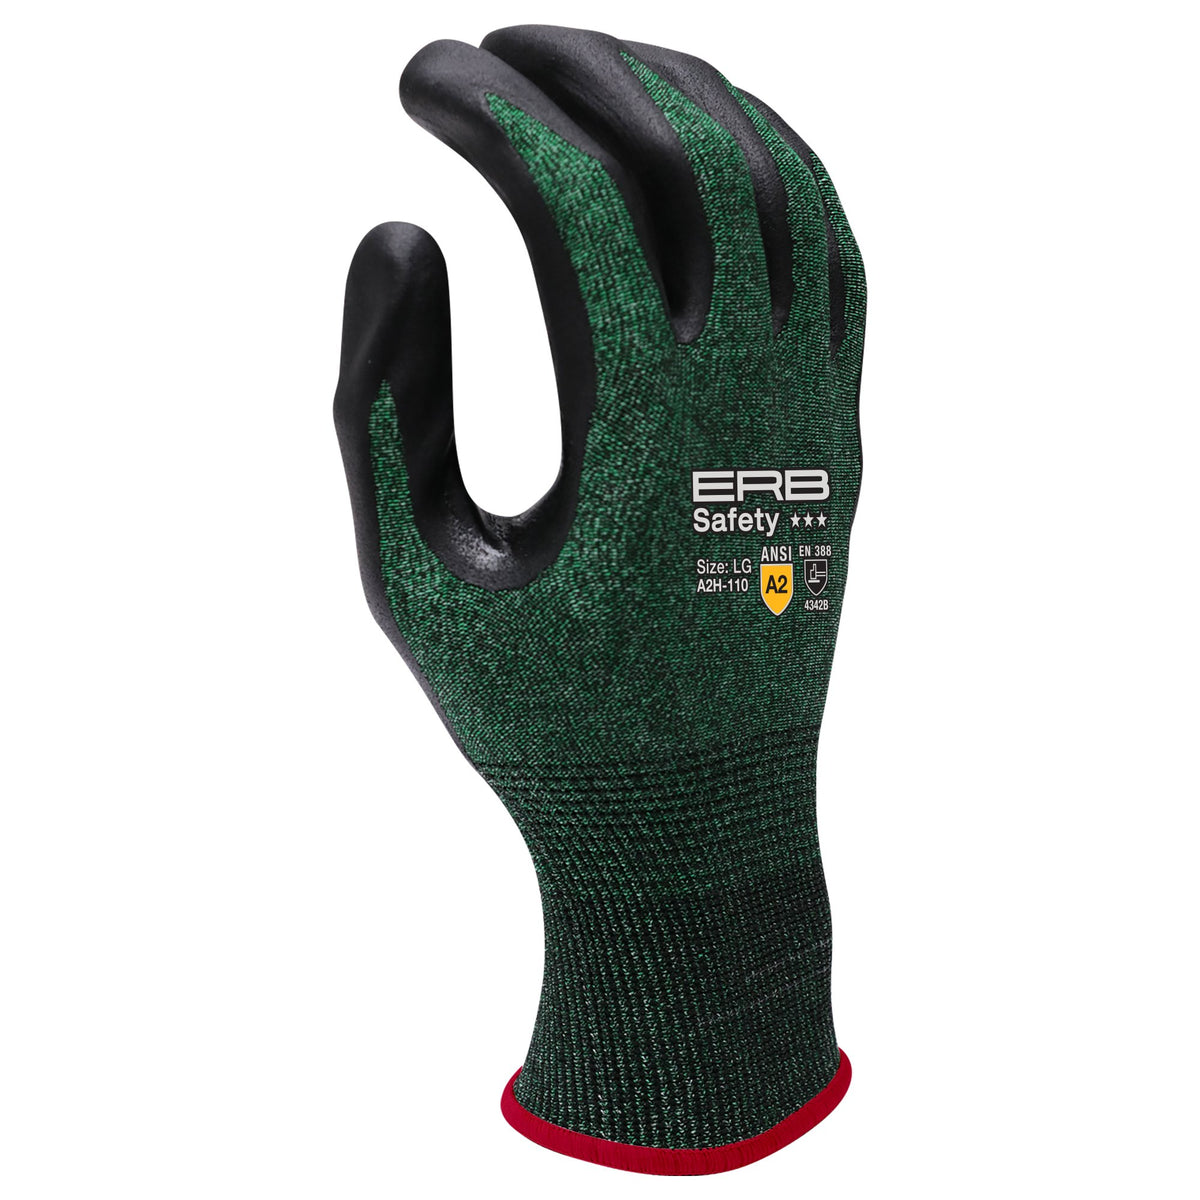 A2H-110 HPPE Cut Glove with Nitrile Micro-Foam Coating 12pair